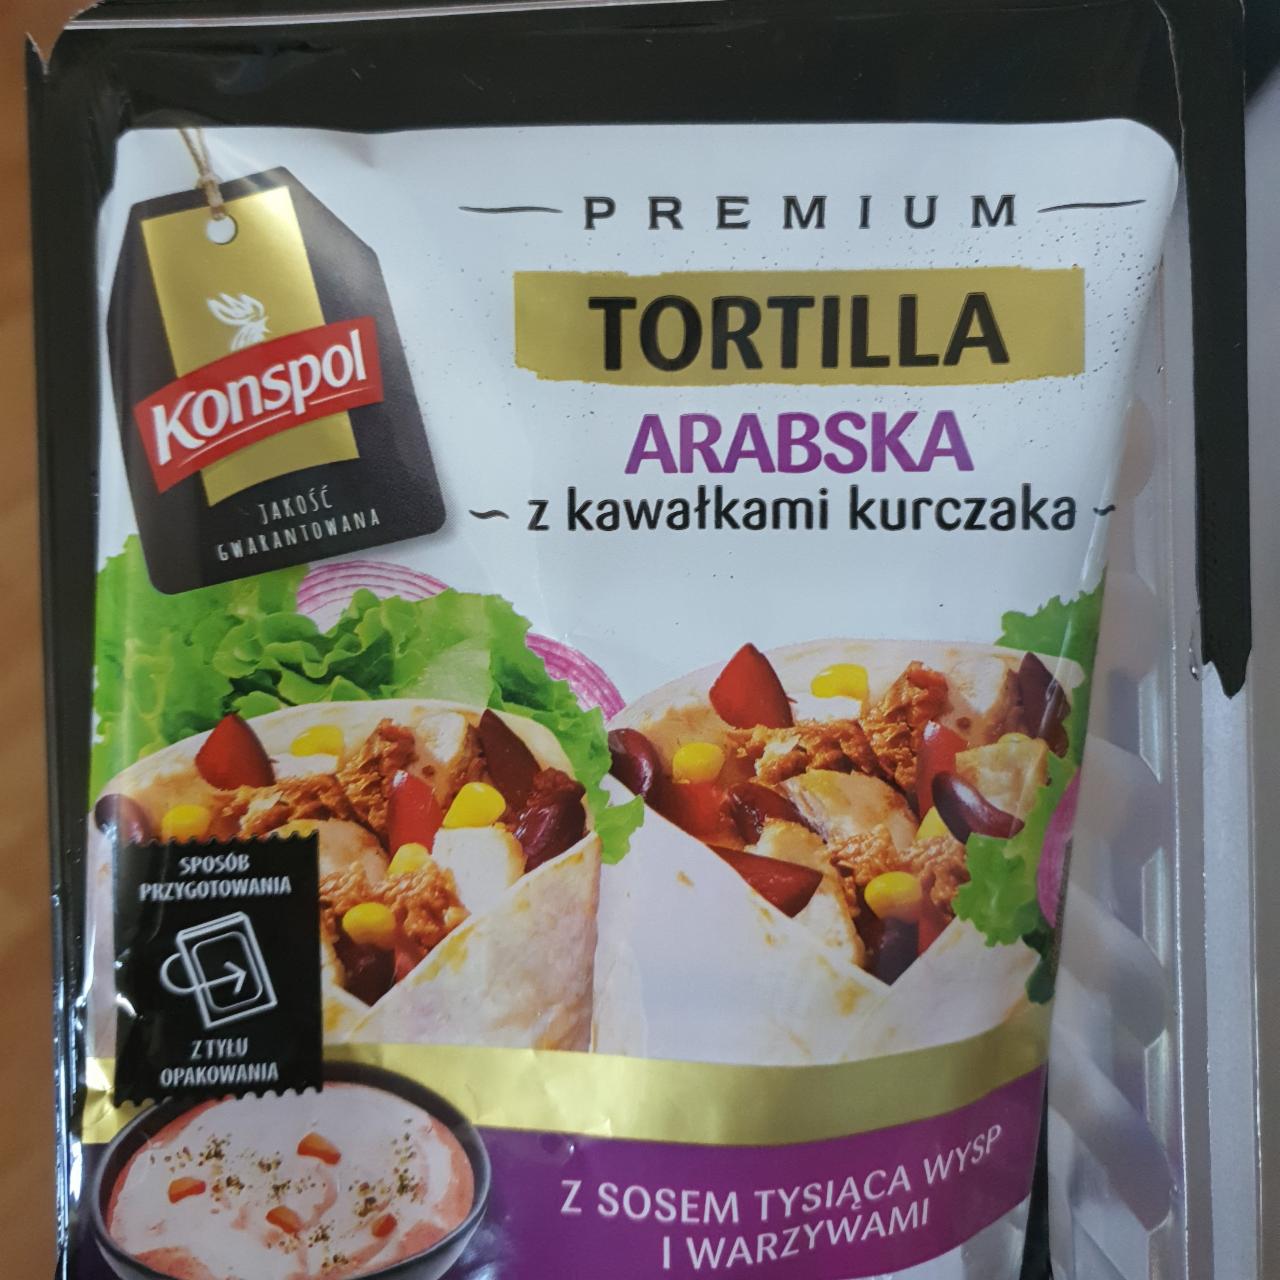 Zdjęcia - Premium Tortilla arabska z kawałkami kurczaka Konspol